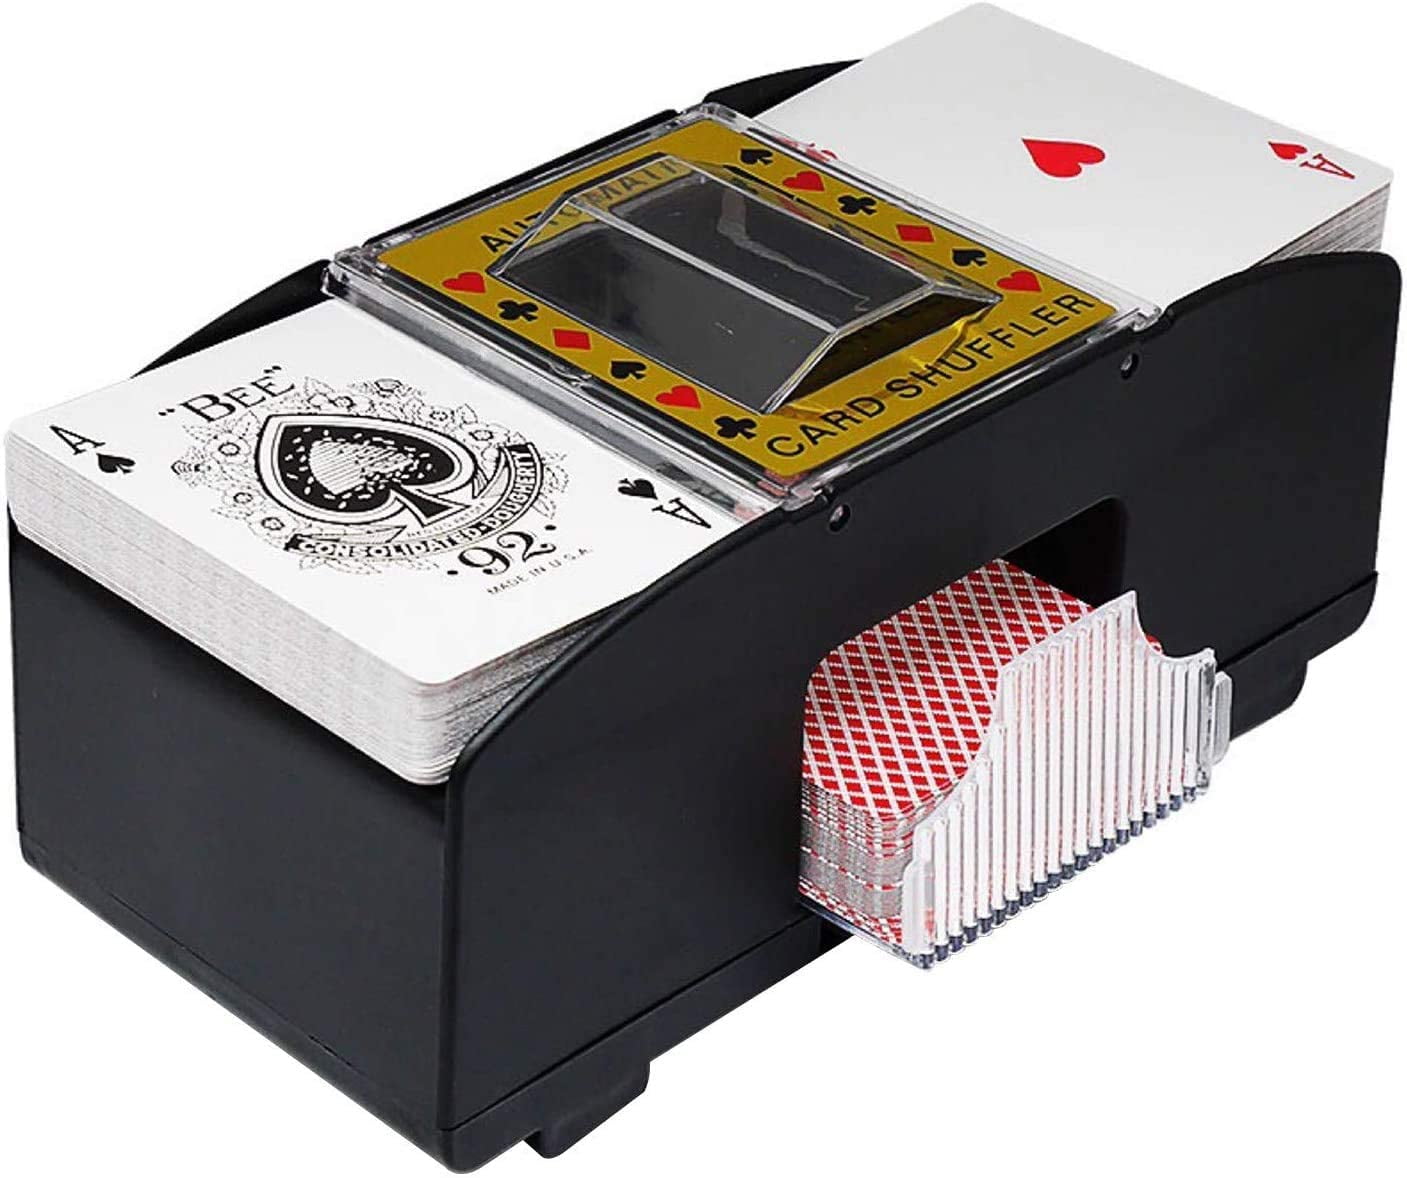 2 Deck Automatic Card Shuffler,Bridge Game Electric Playing Card Shuffler Automatic Poker Card Shuffler Machine Great for Classic Poker & Trading Card Games…